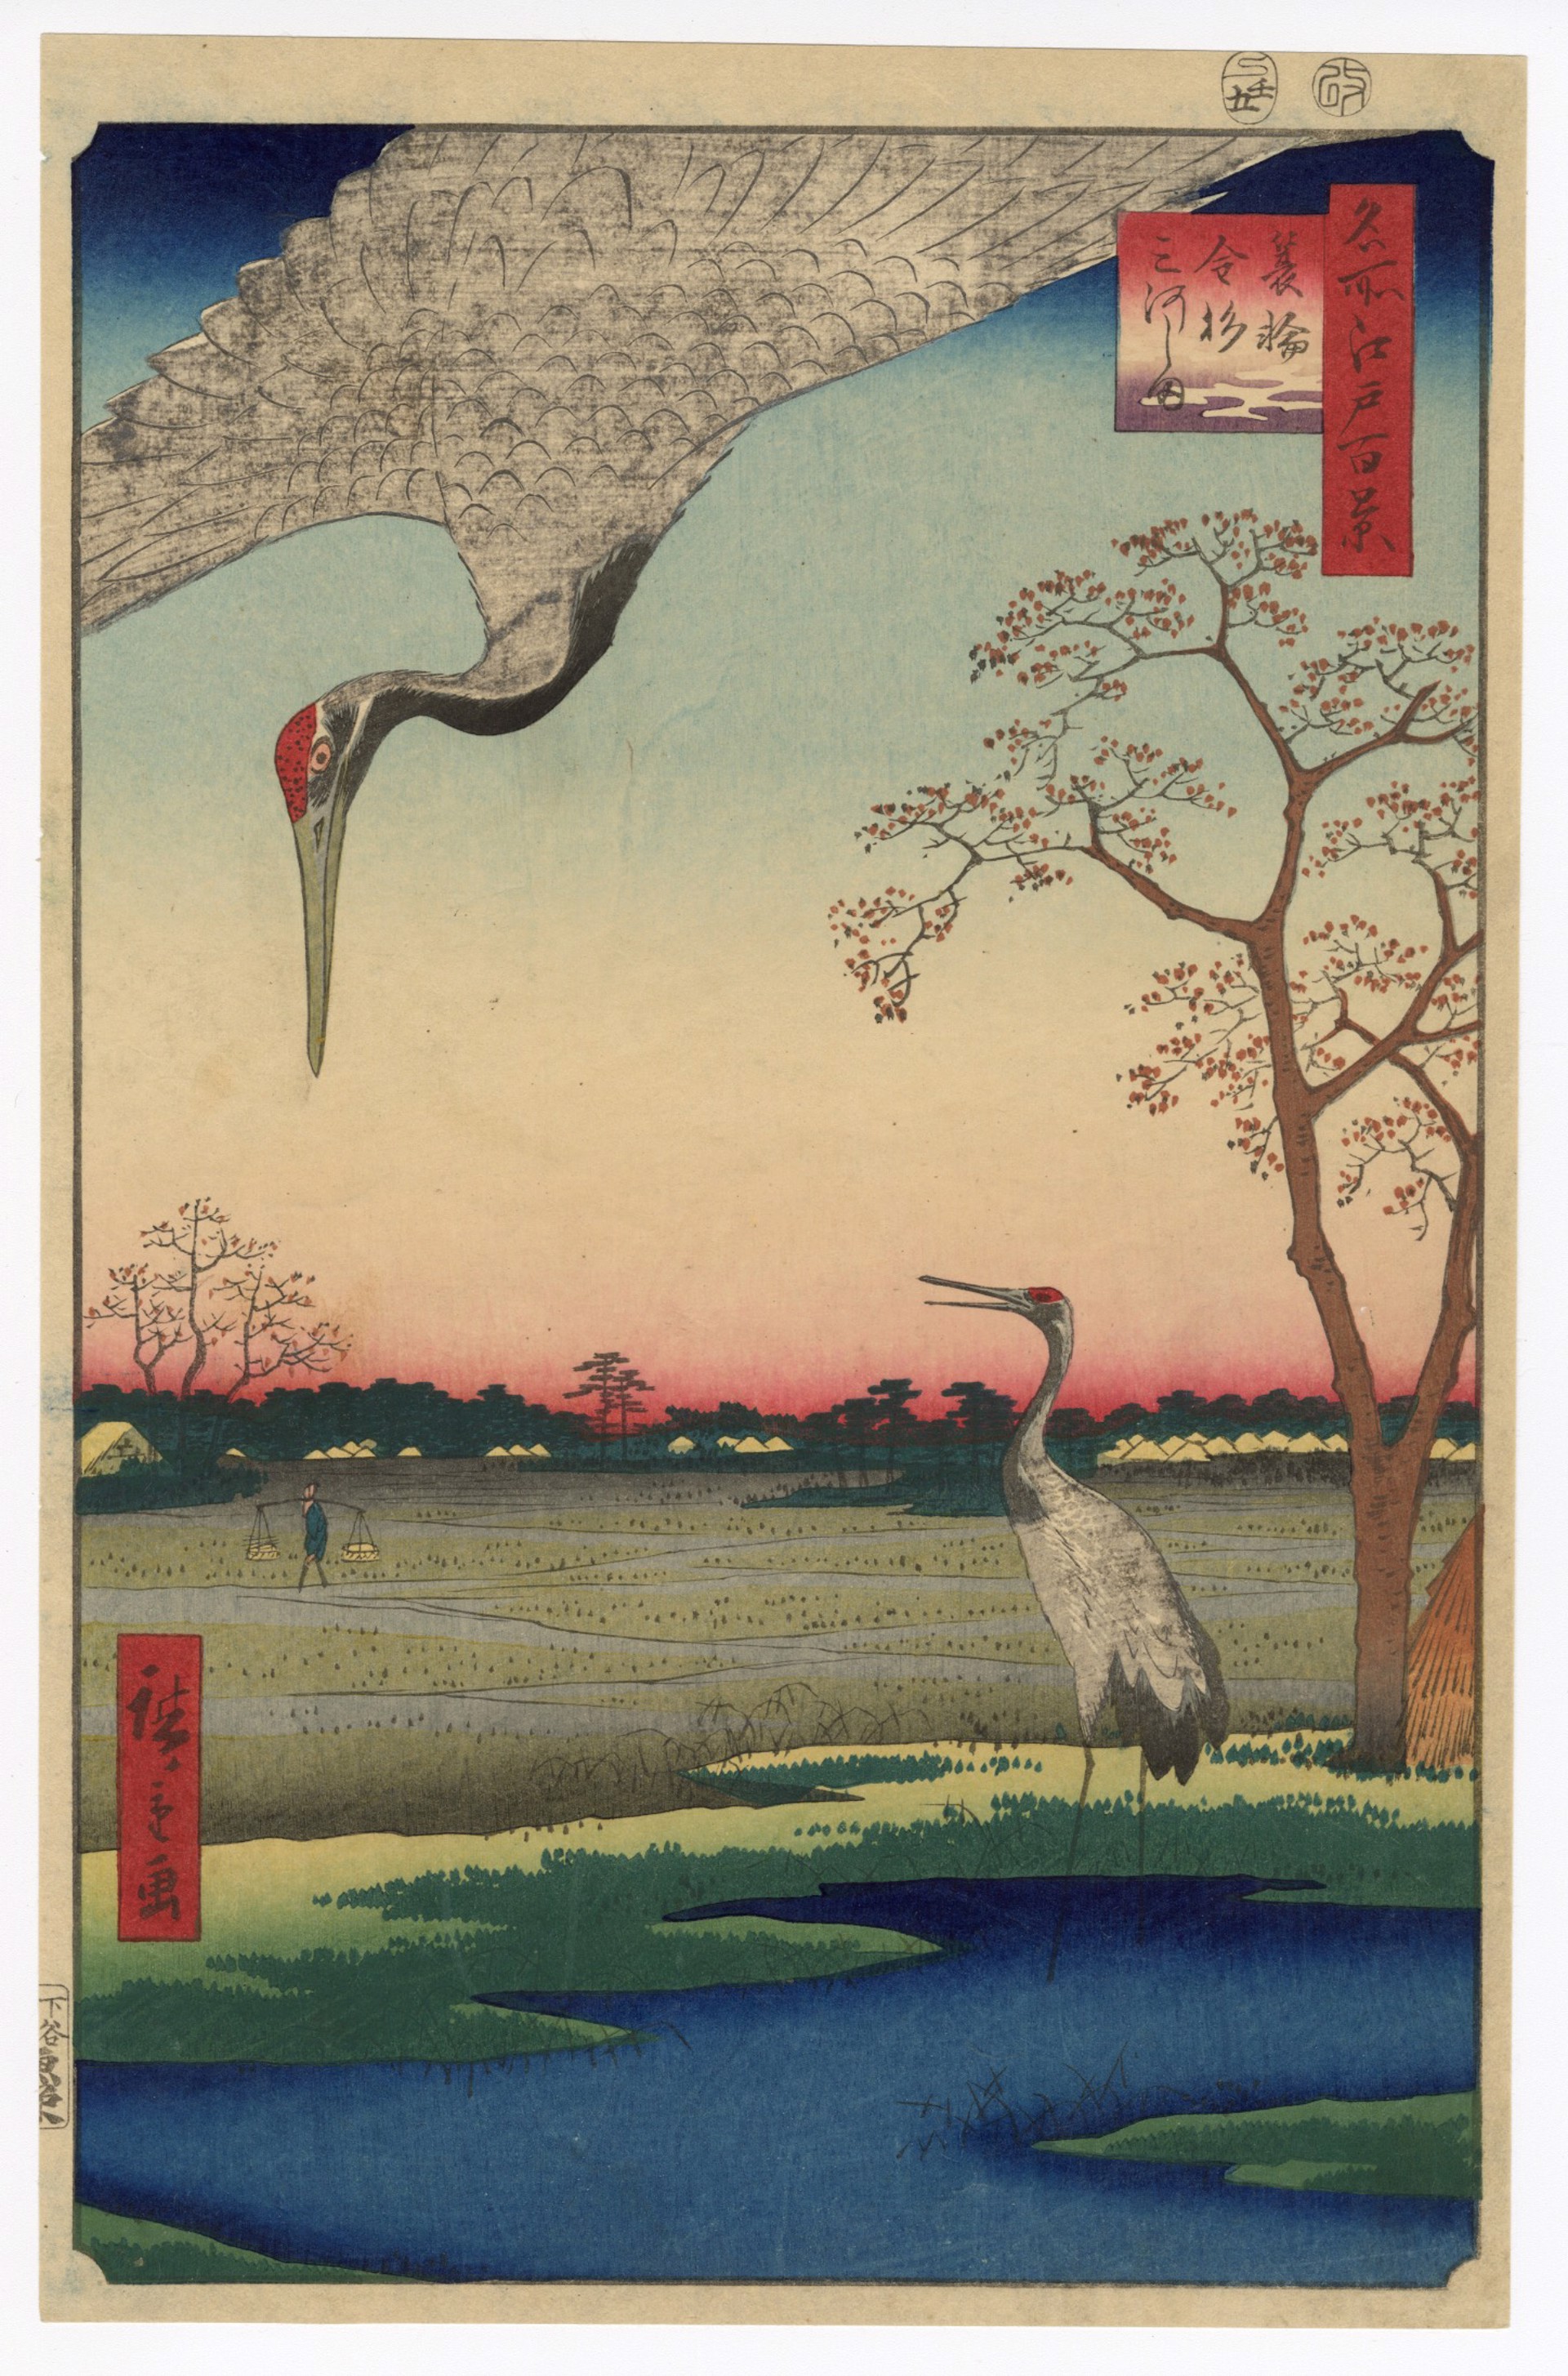 Minowa and Kanasugi, Mikawa Island by Hiroshige